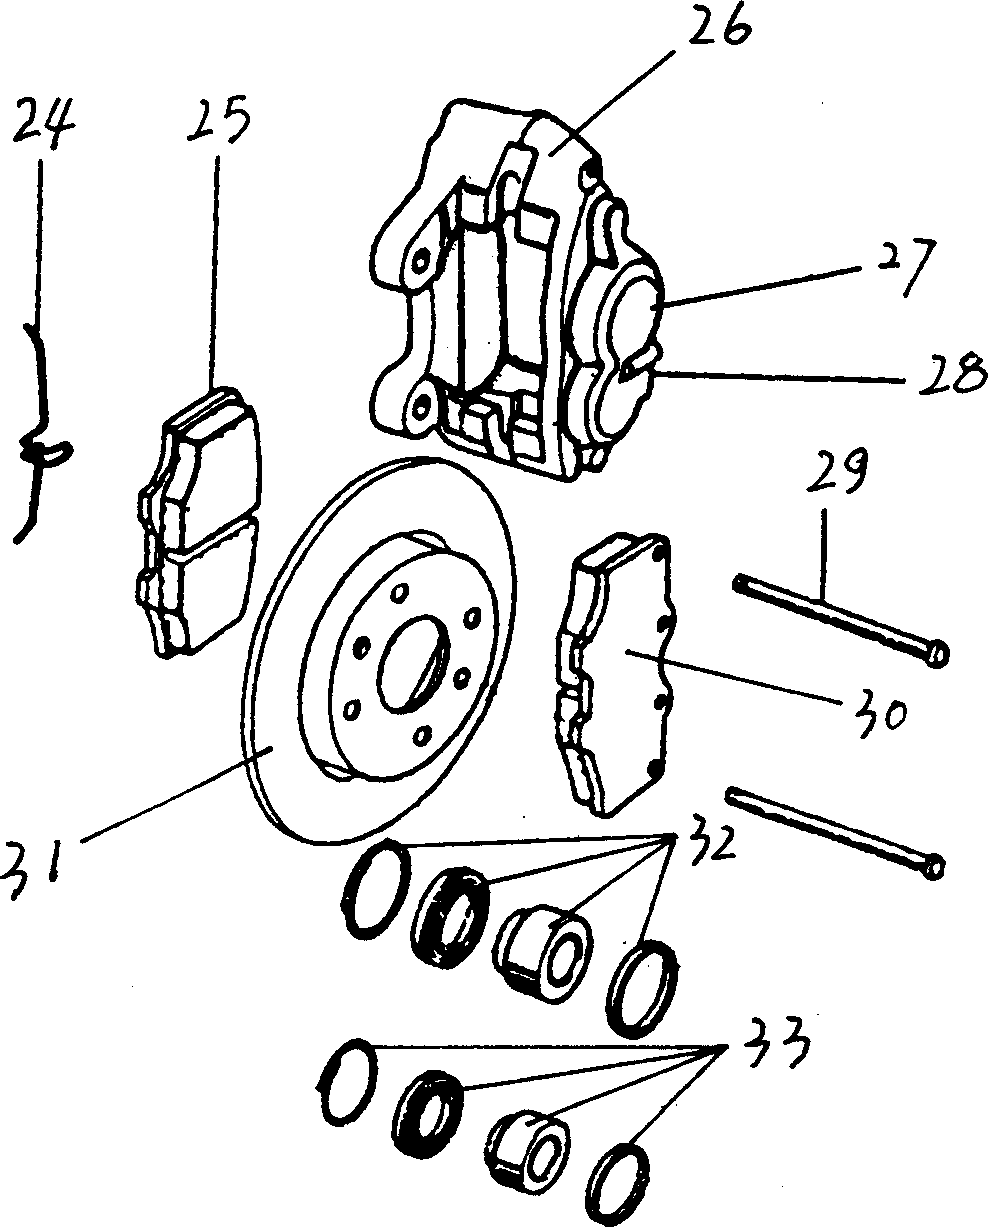 Gas-liquid mixed multi-piston disk brake system